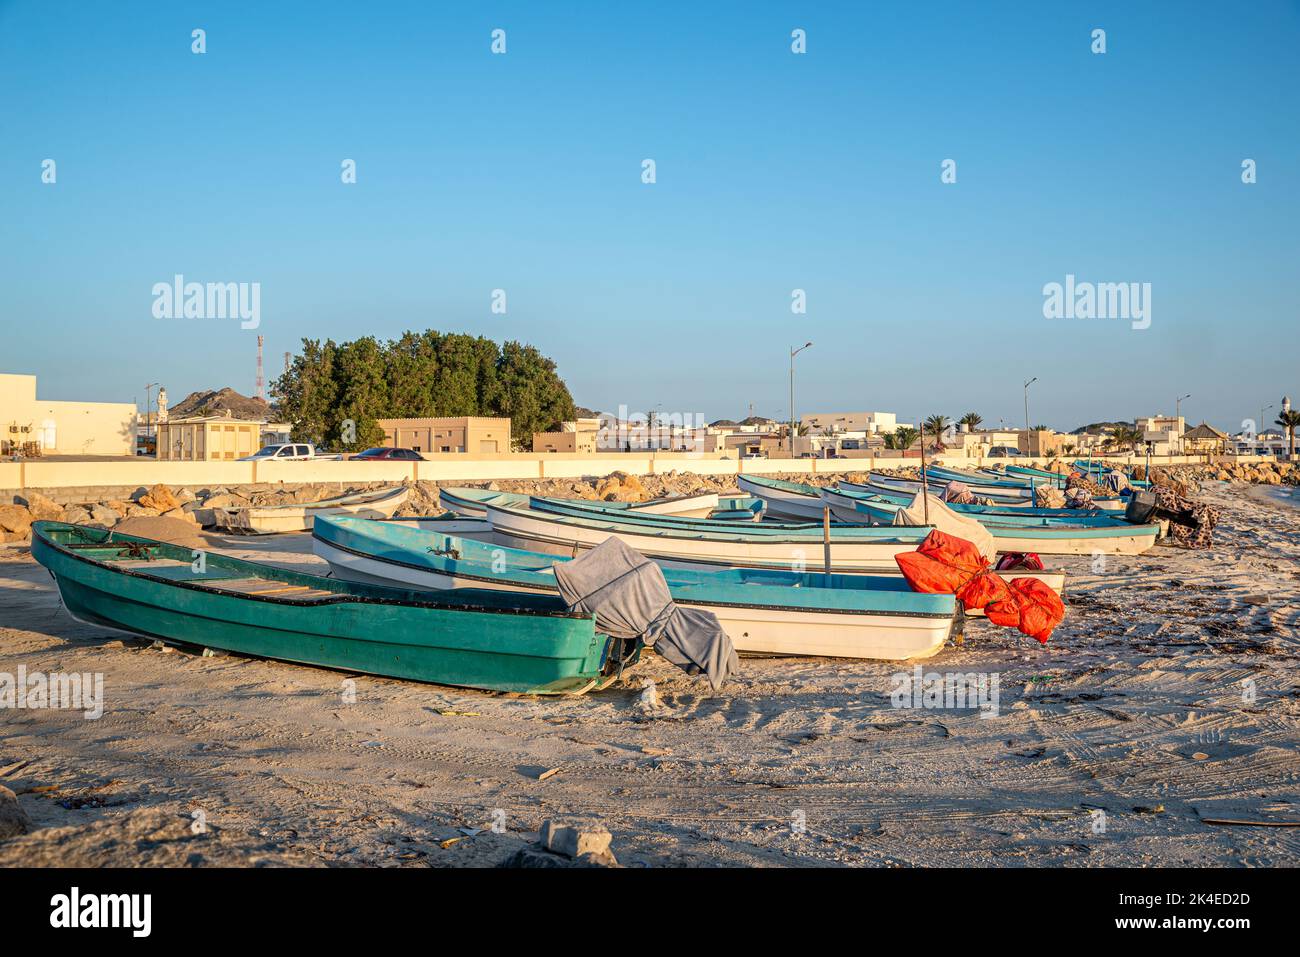 Outbord engine boats on the beach, Masirah Island, Oman Stock Photo